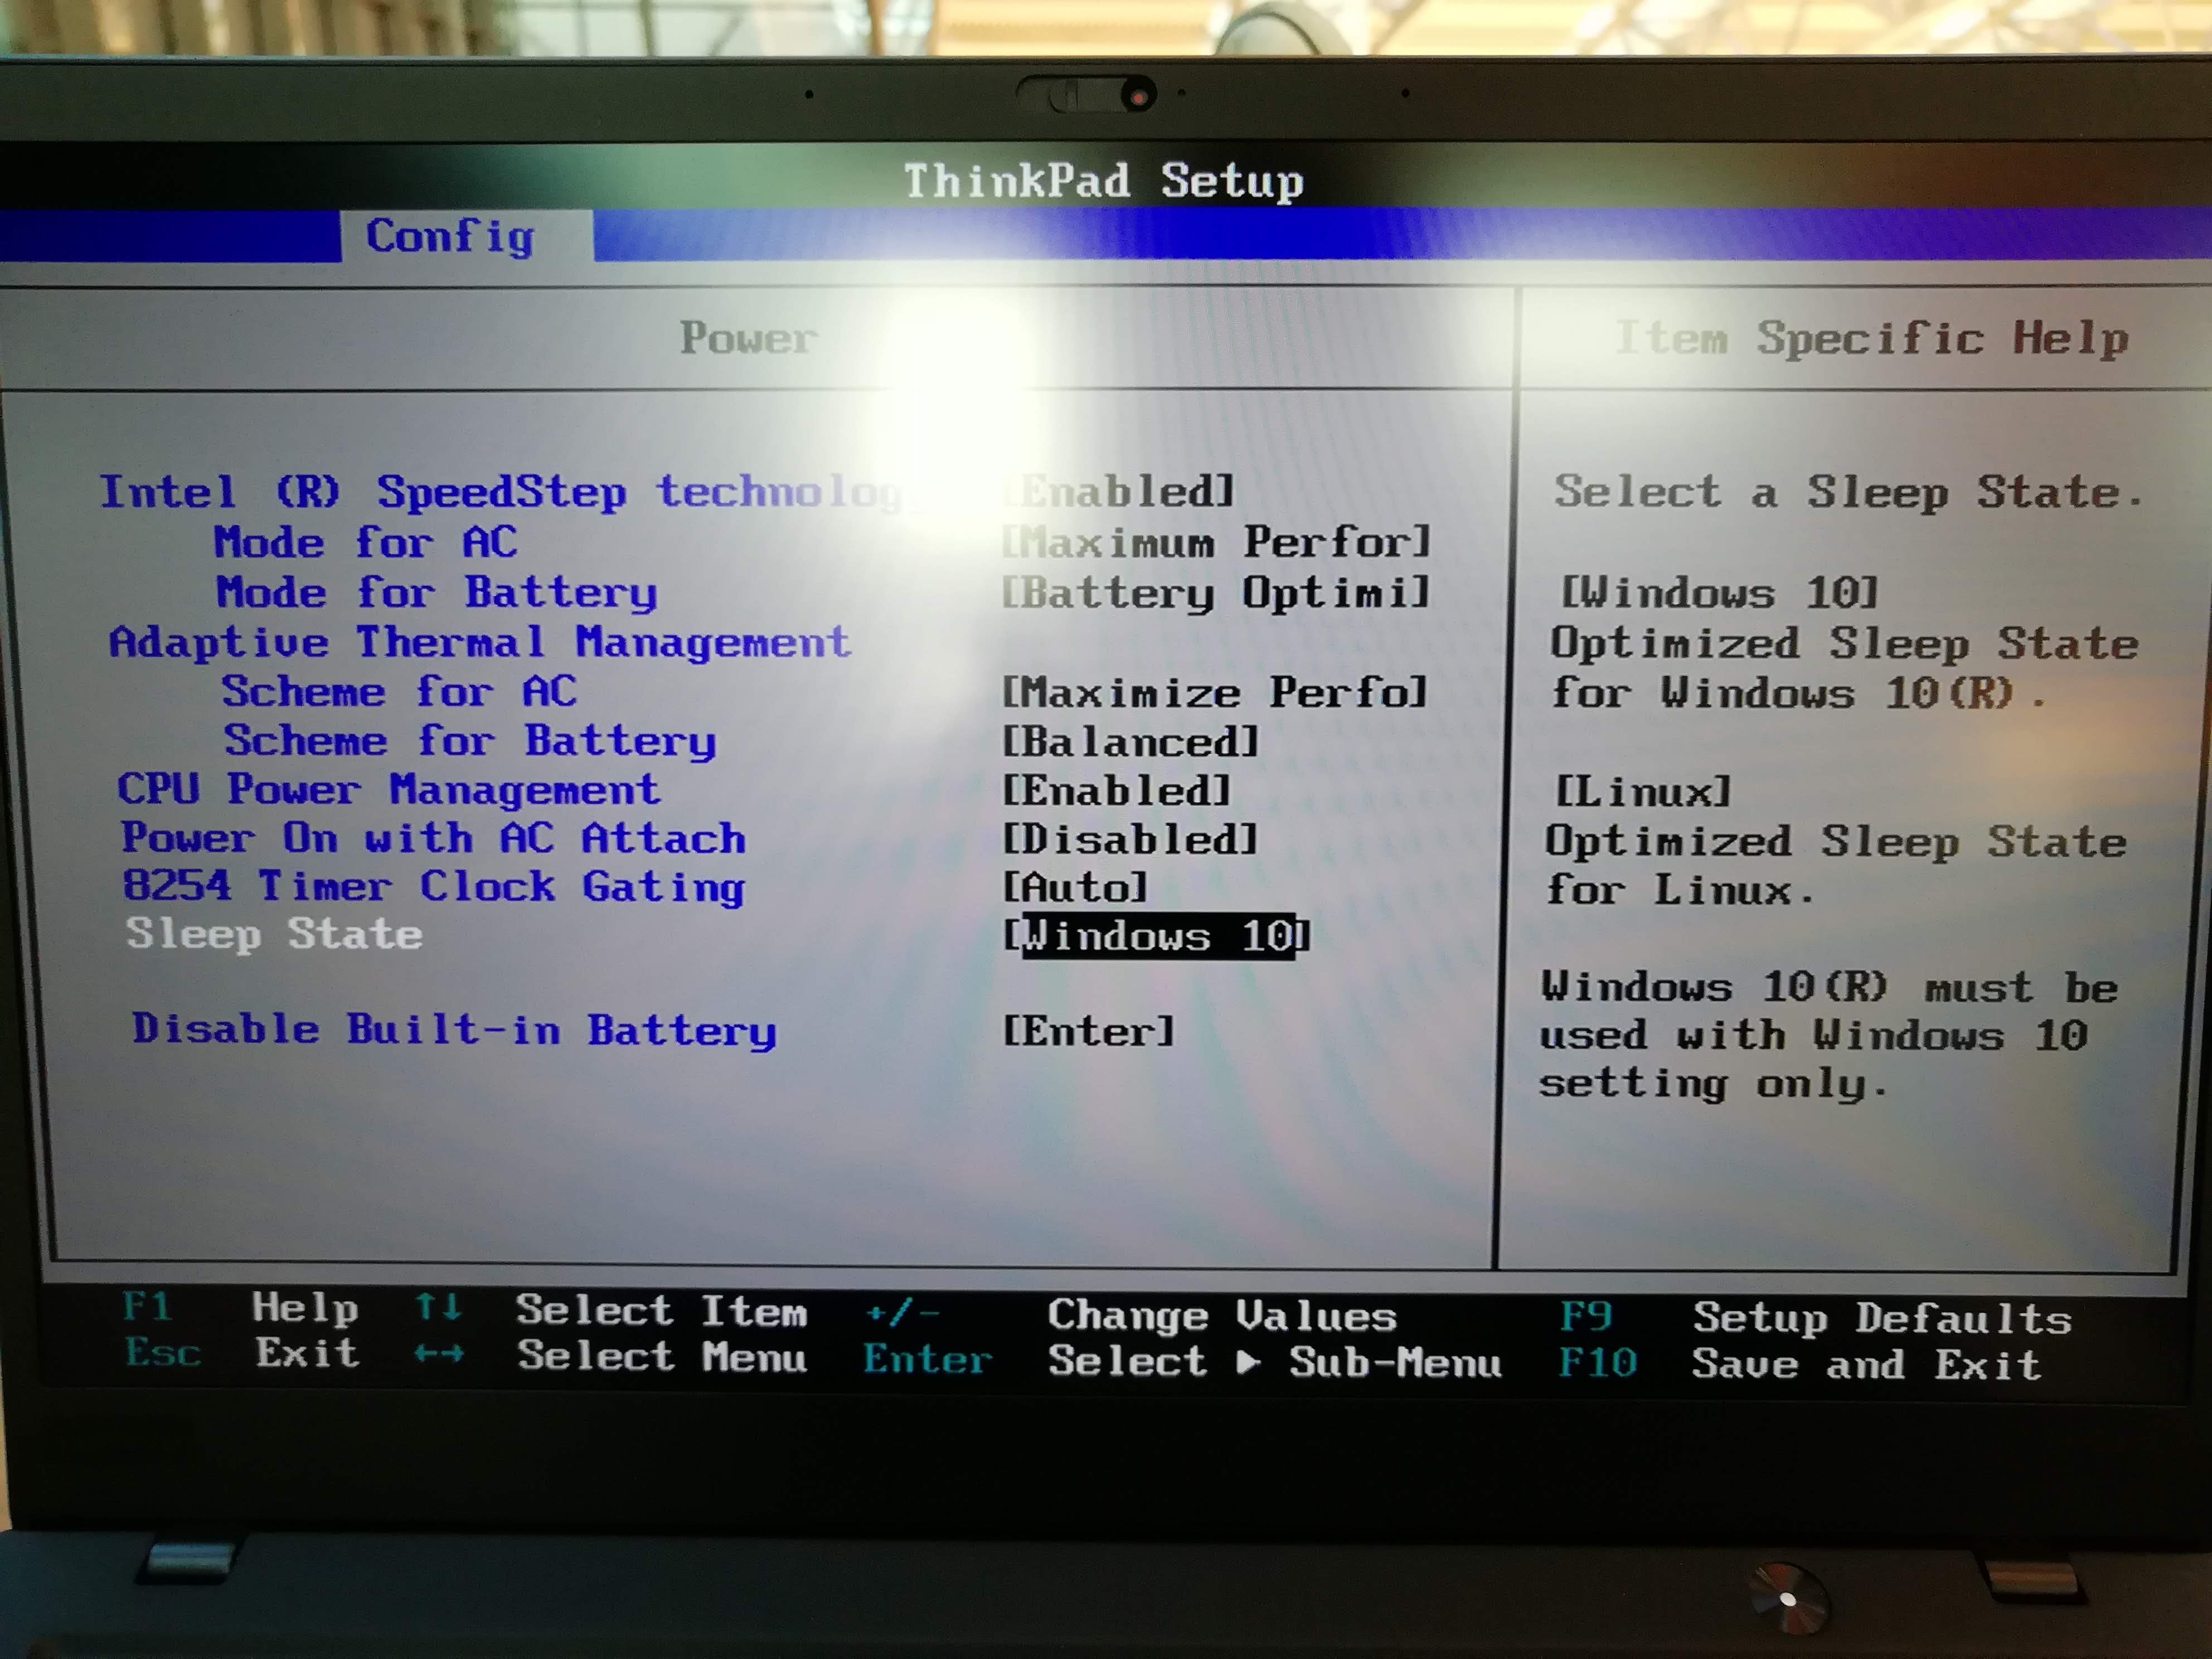 Lenovo Thinkpad X1 6en Enabling S3 Sleep For Linux After Firmware Update Brauner S Blog